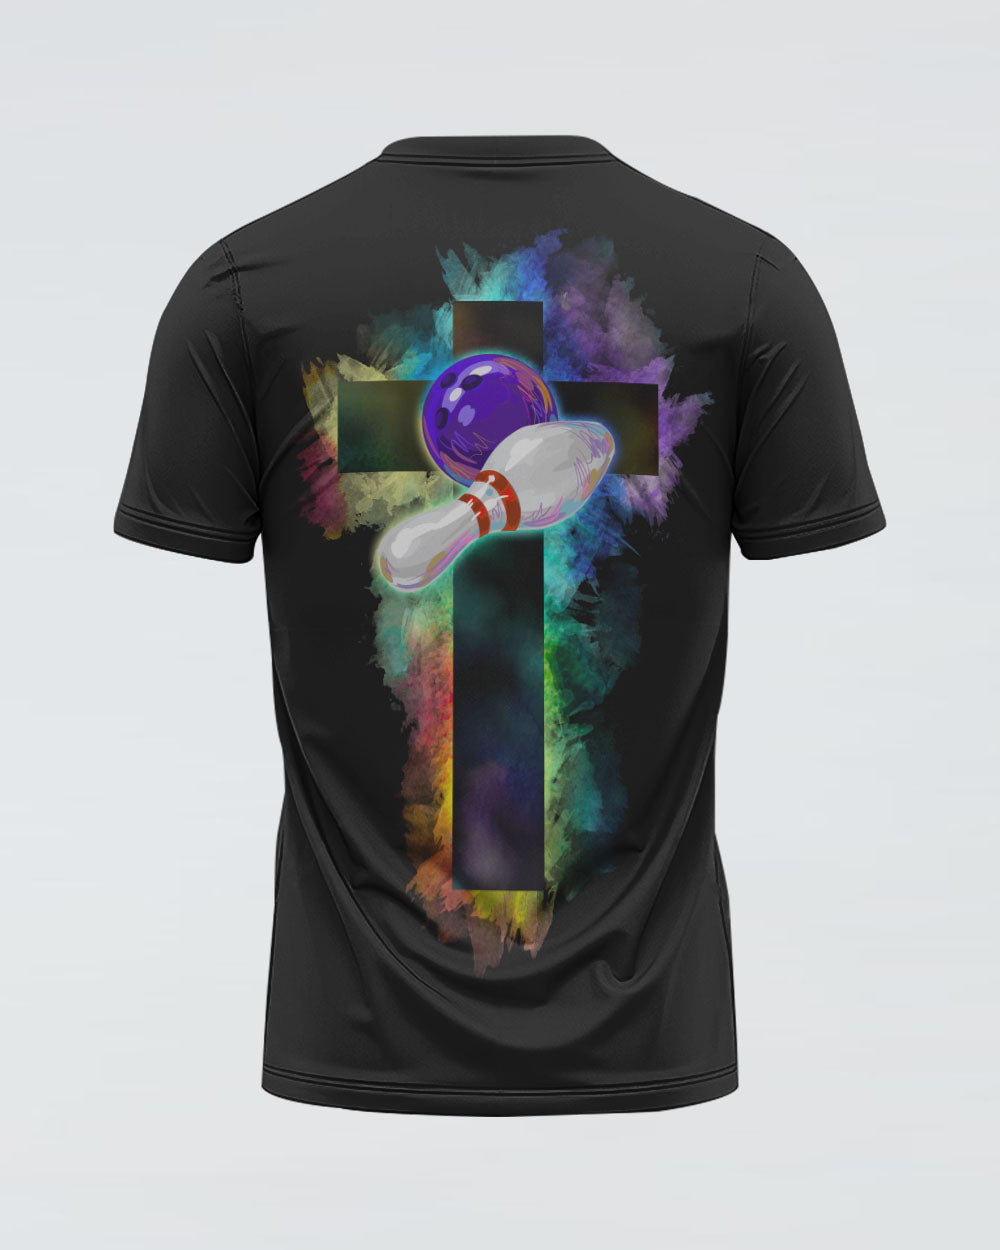 Bowling Cross Colorful Women's Christian Tshirt